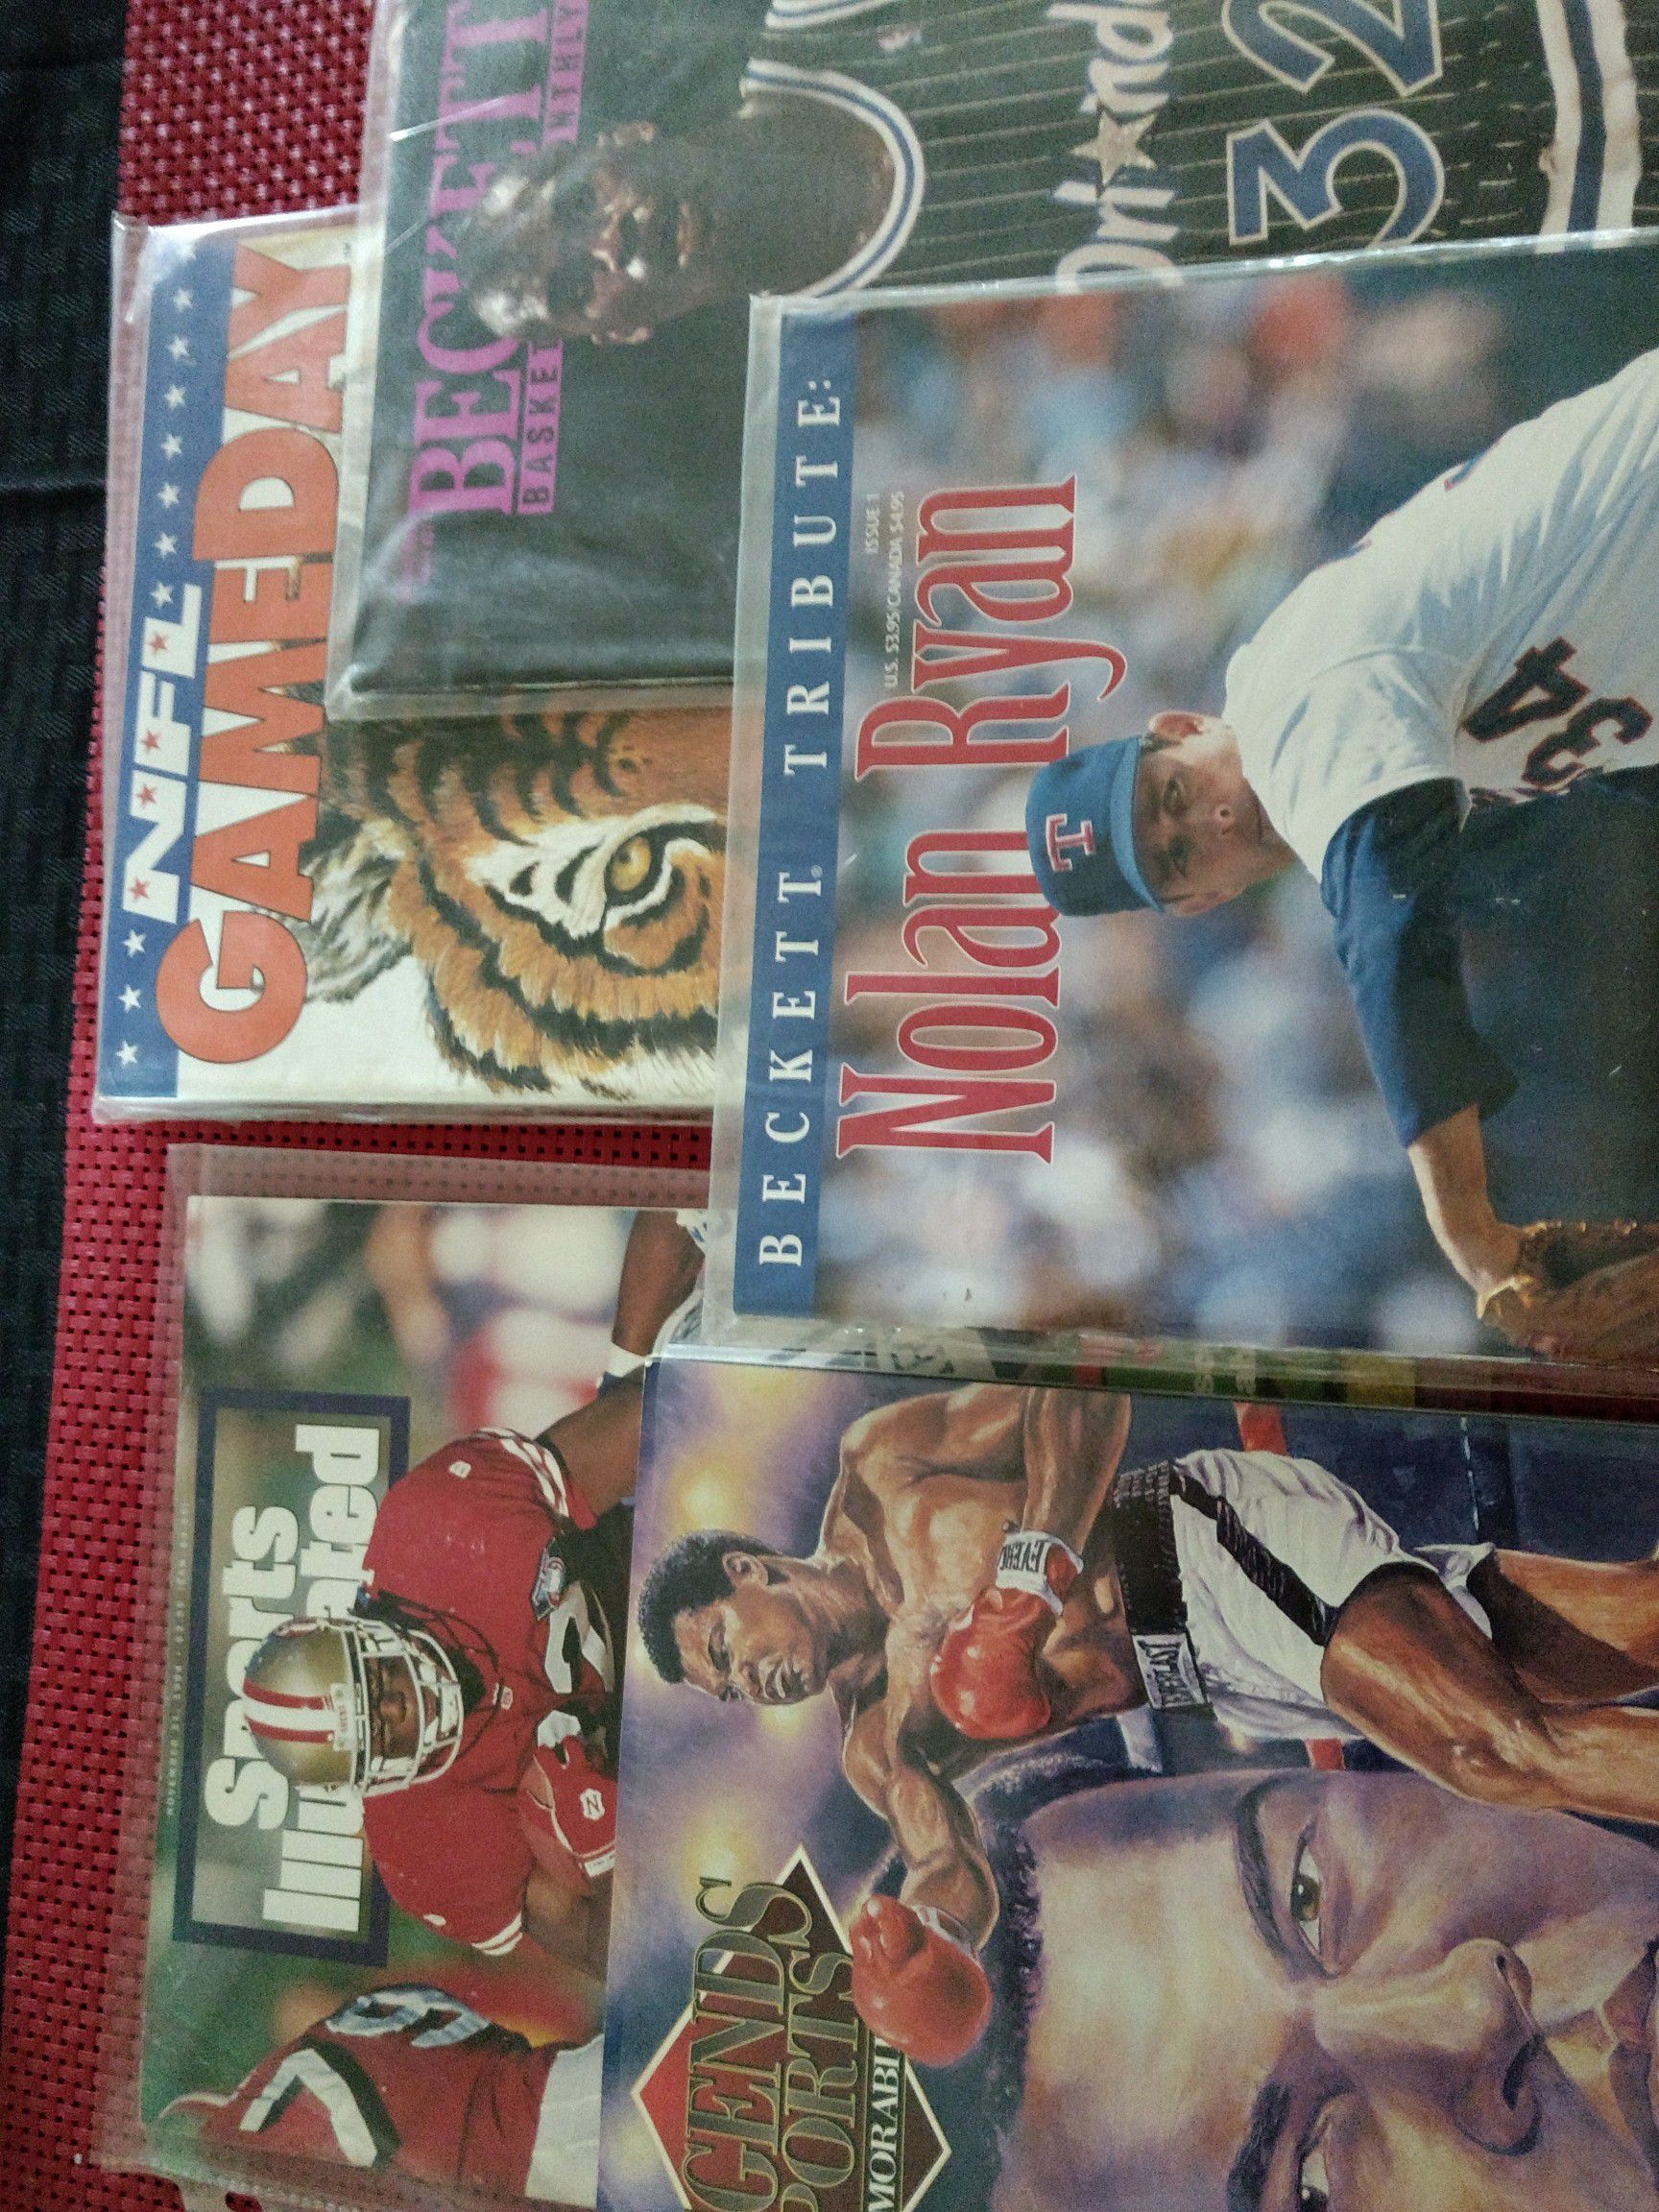 Old Sports magazines